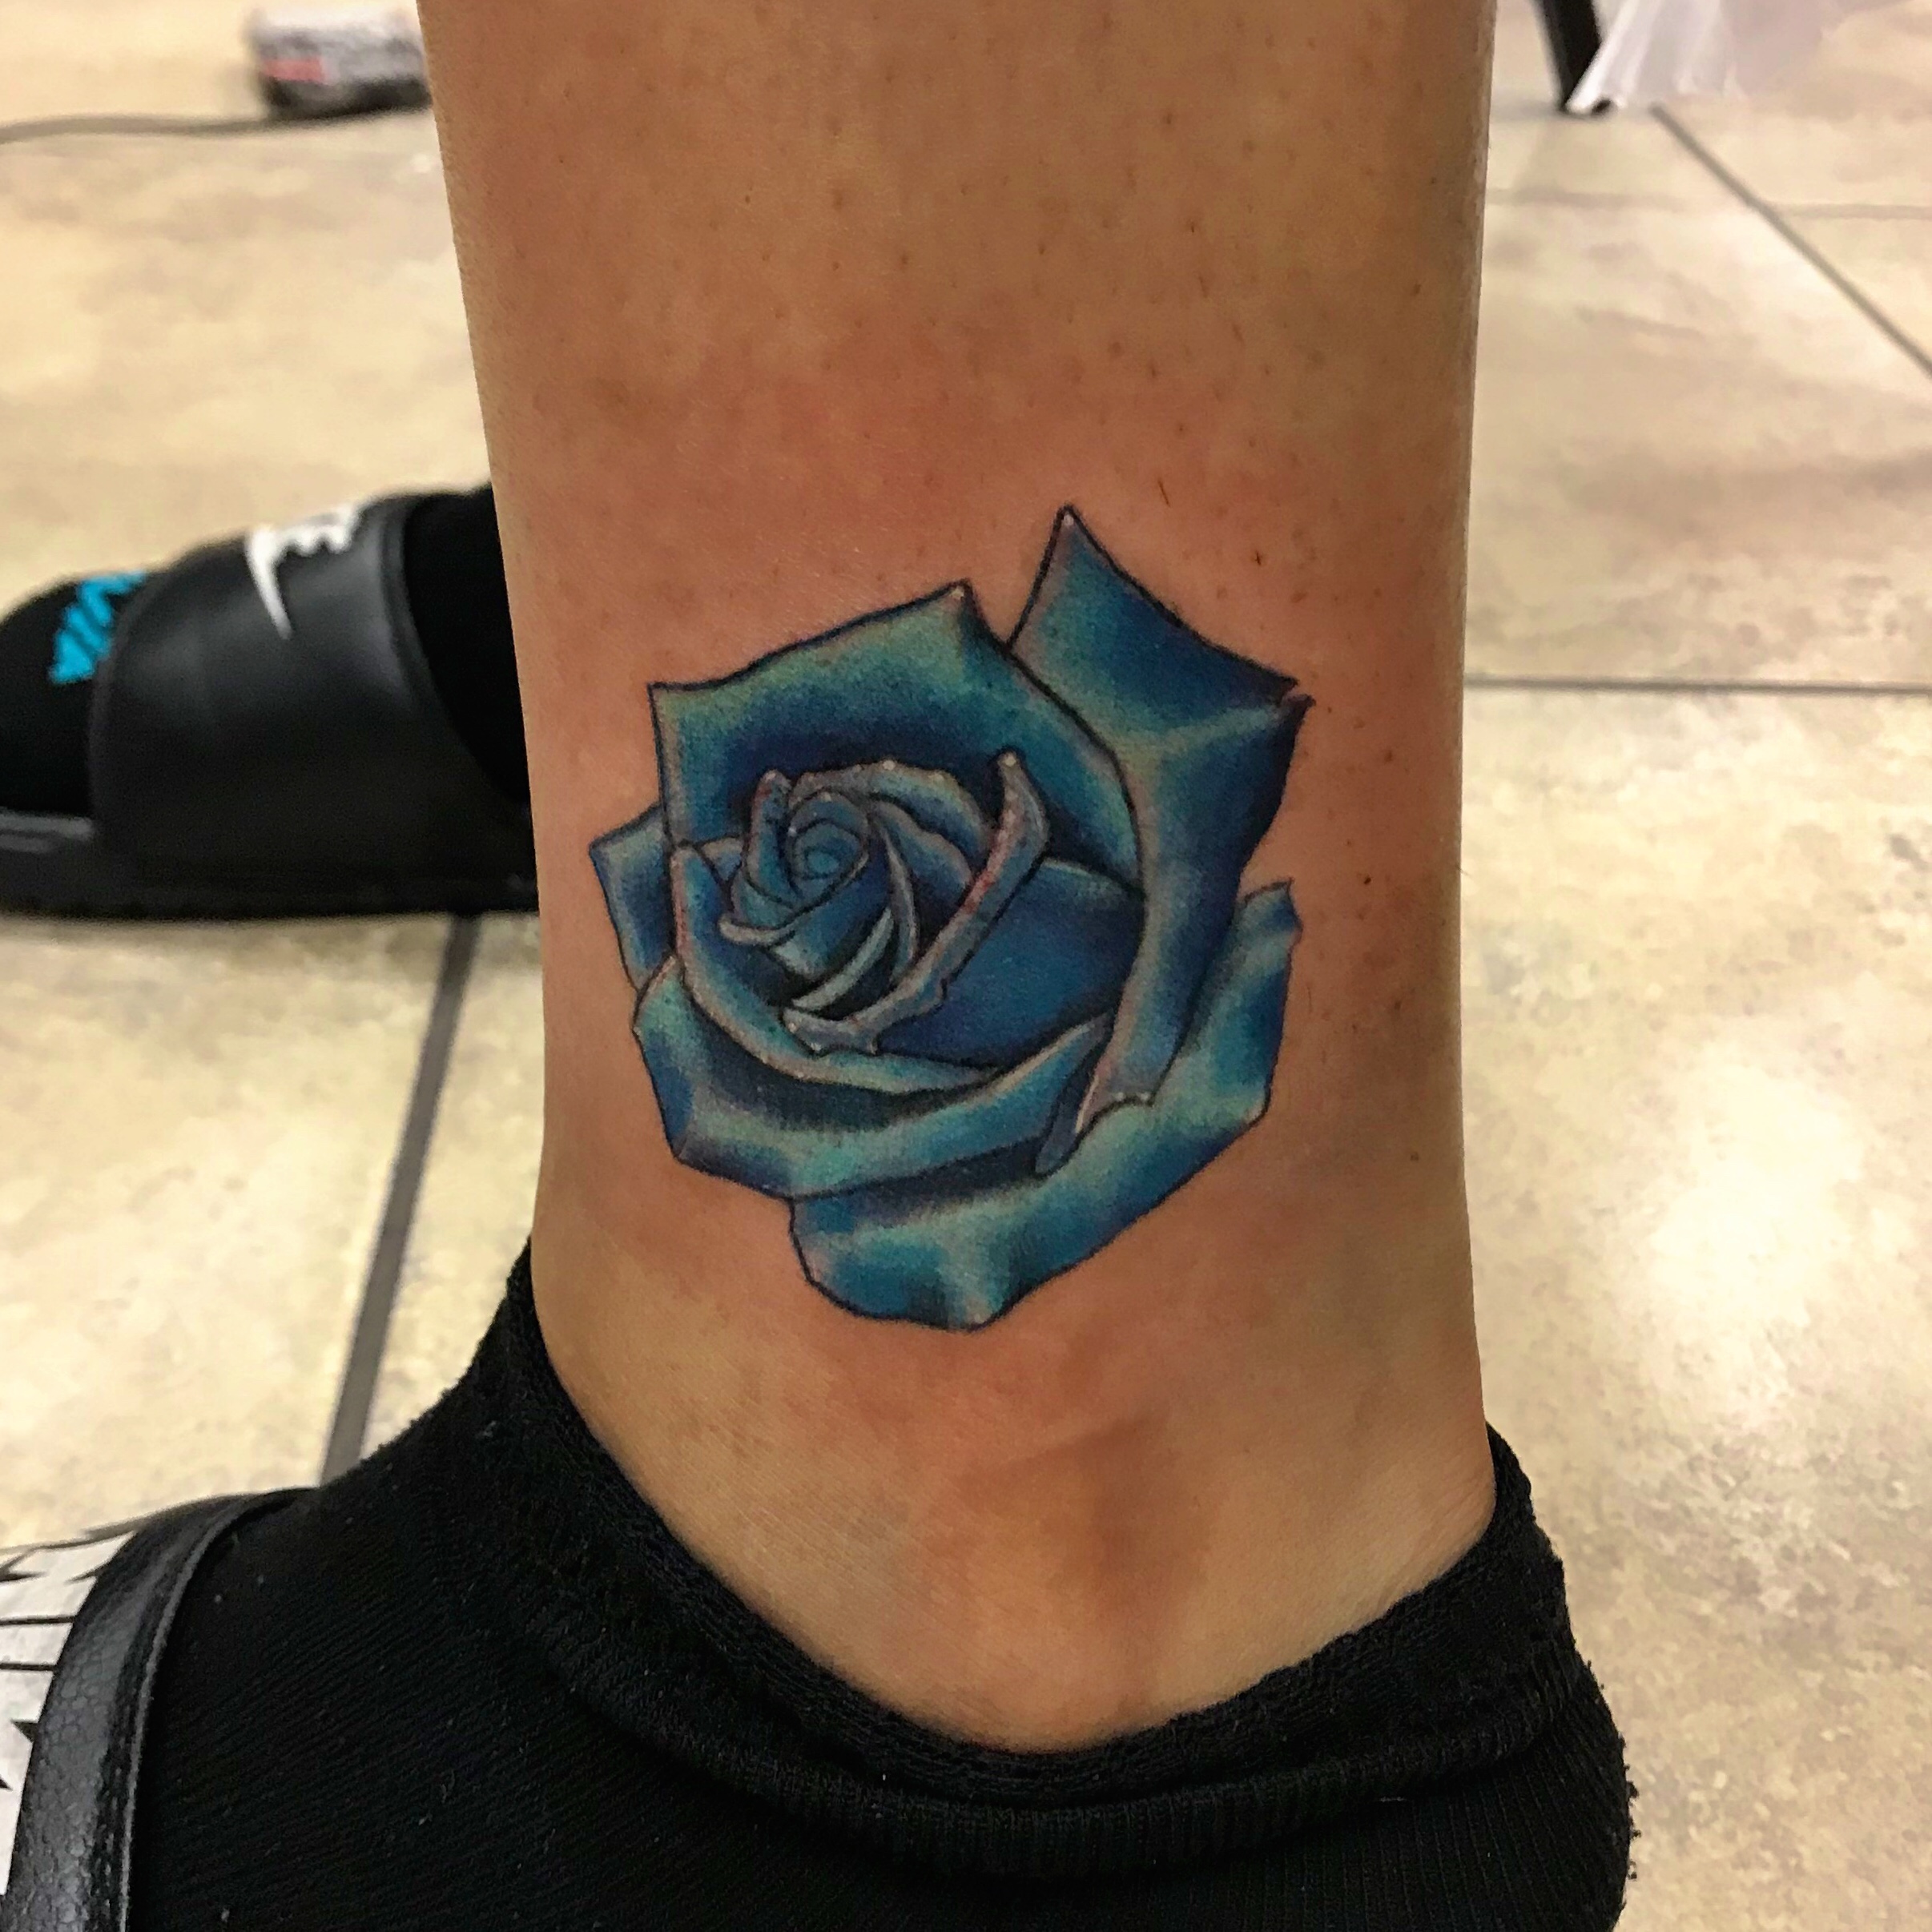 Blue rose tattoo on the inner forearm.